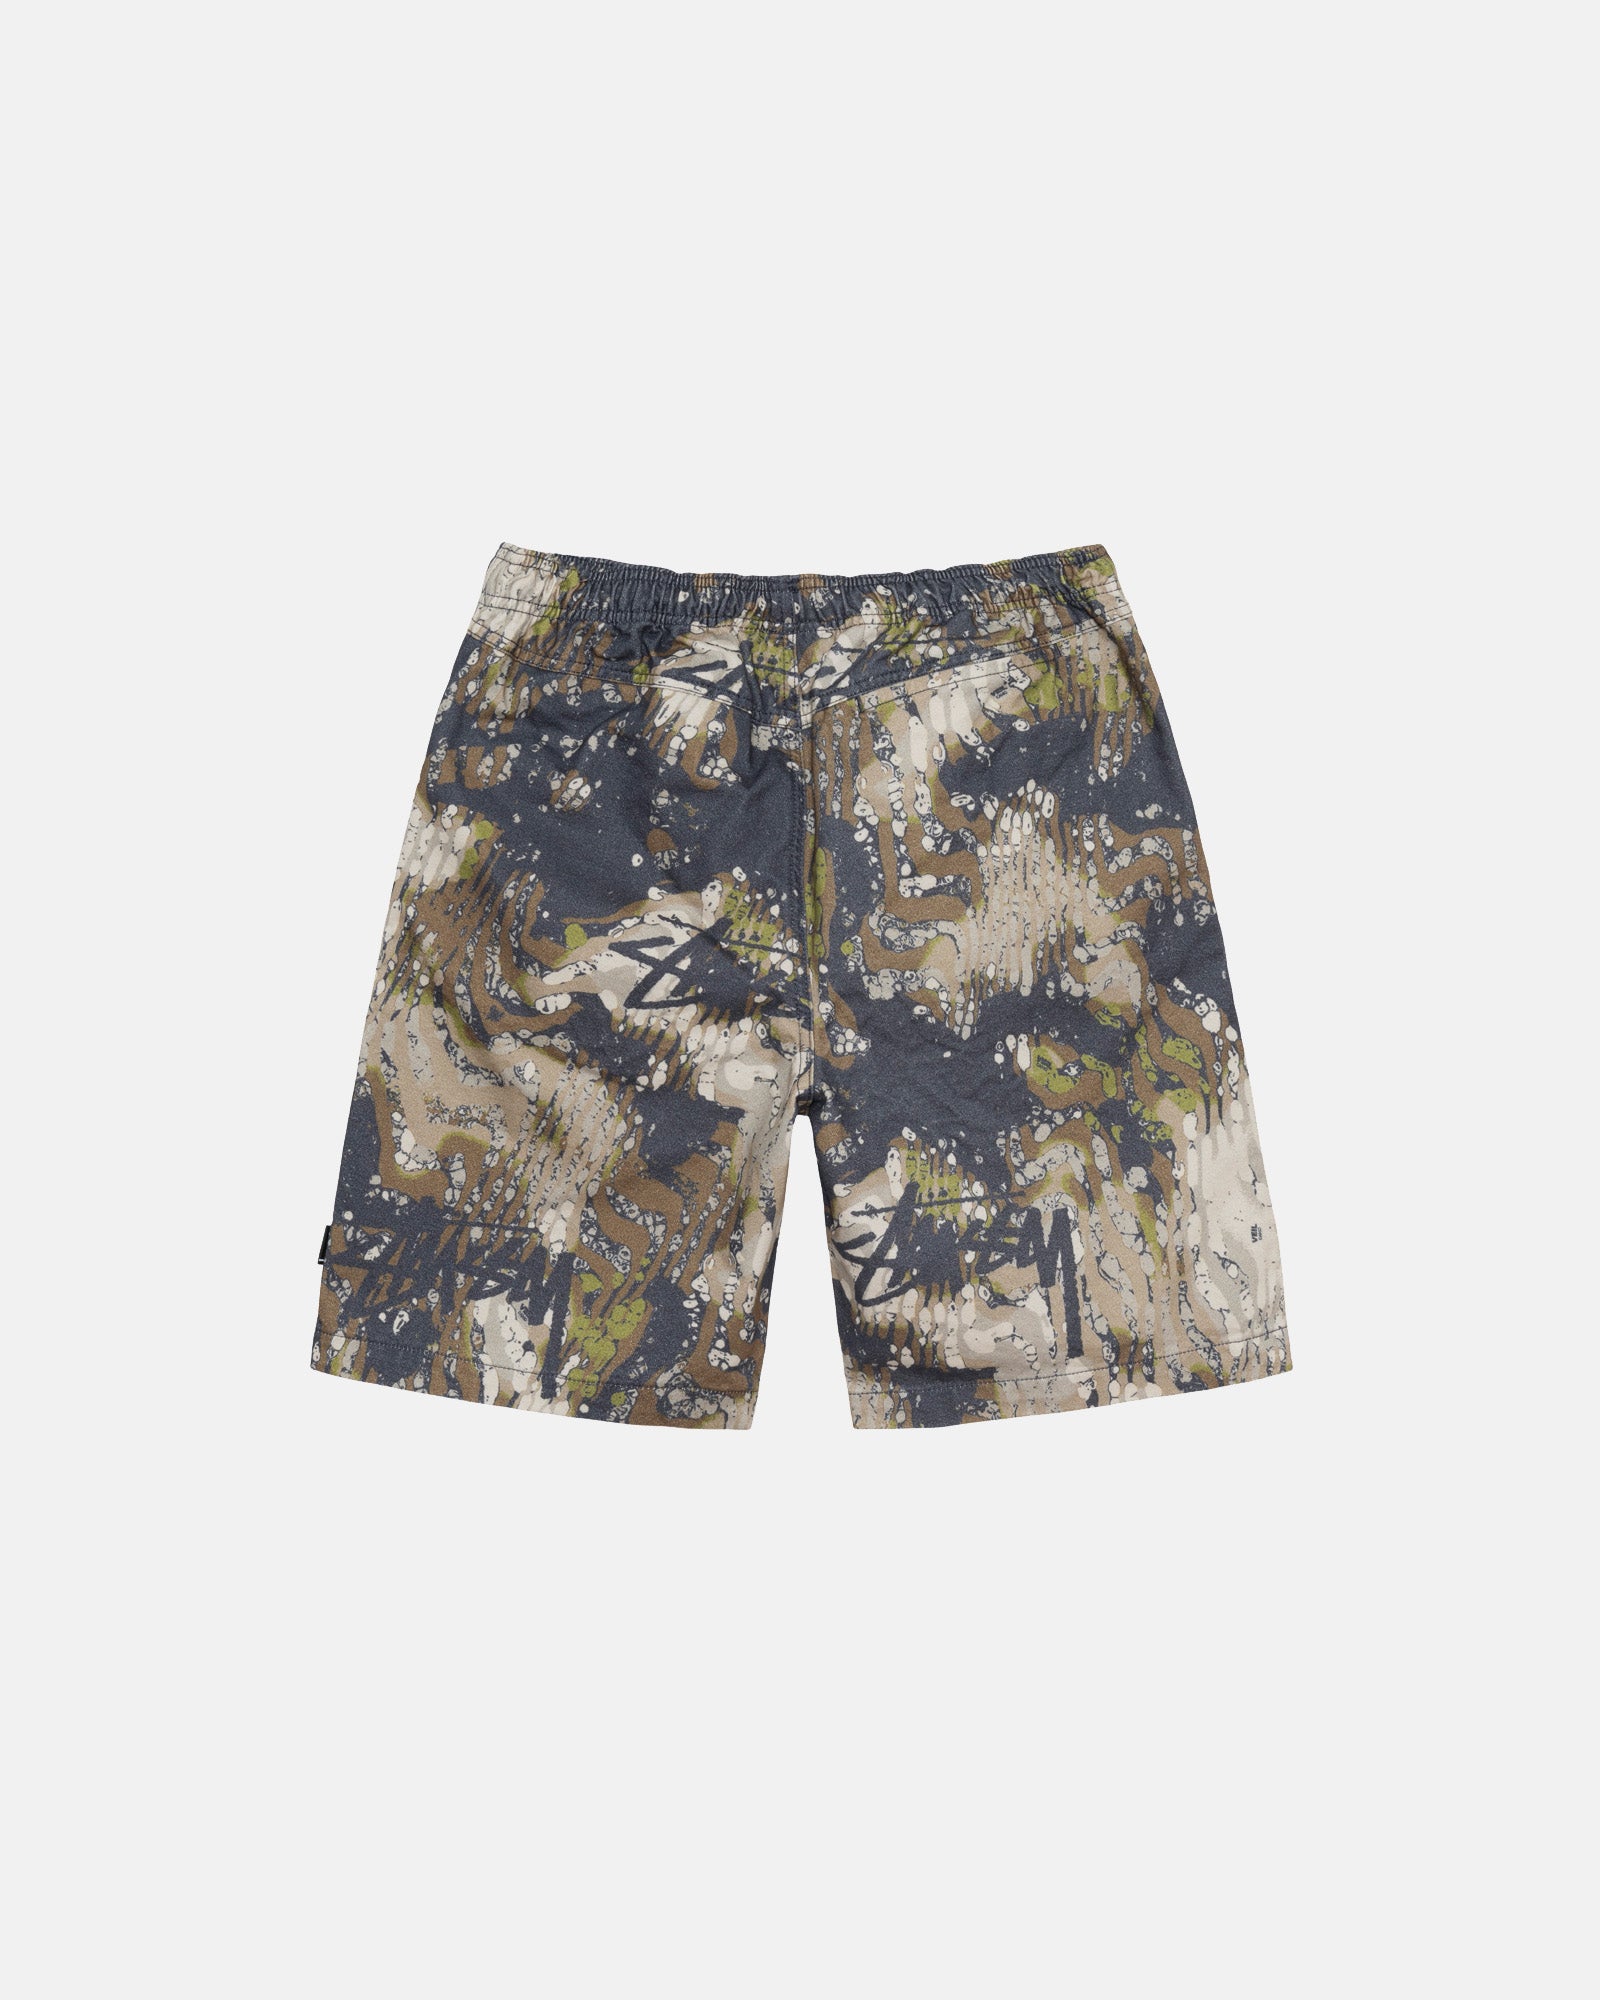 Veil Camo Beach Short - Men's Shorts & Trunks | Stüssy